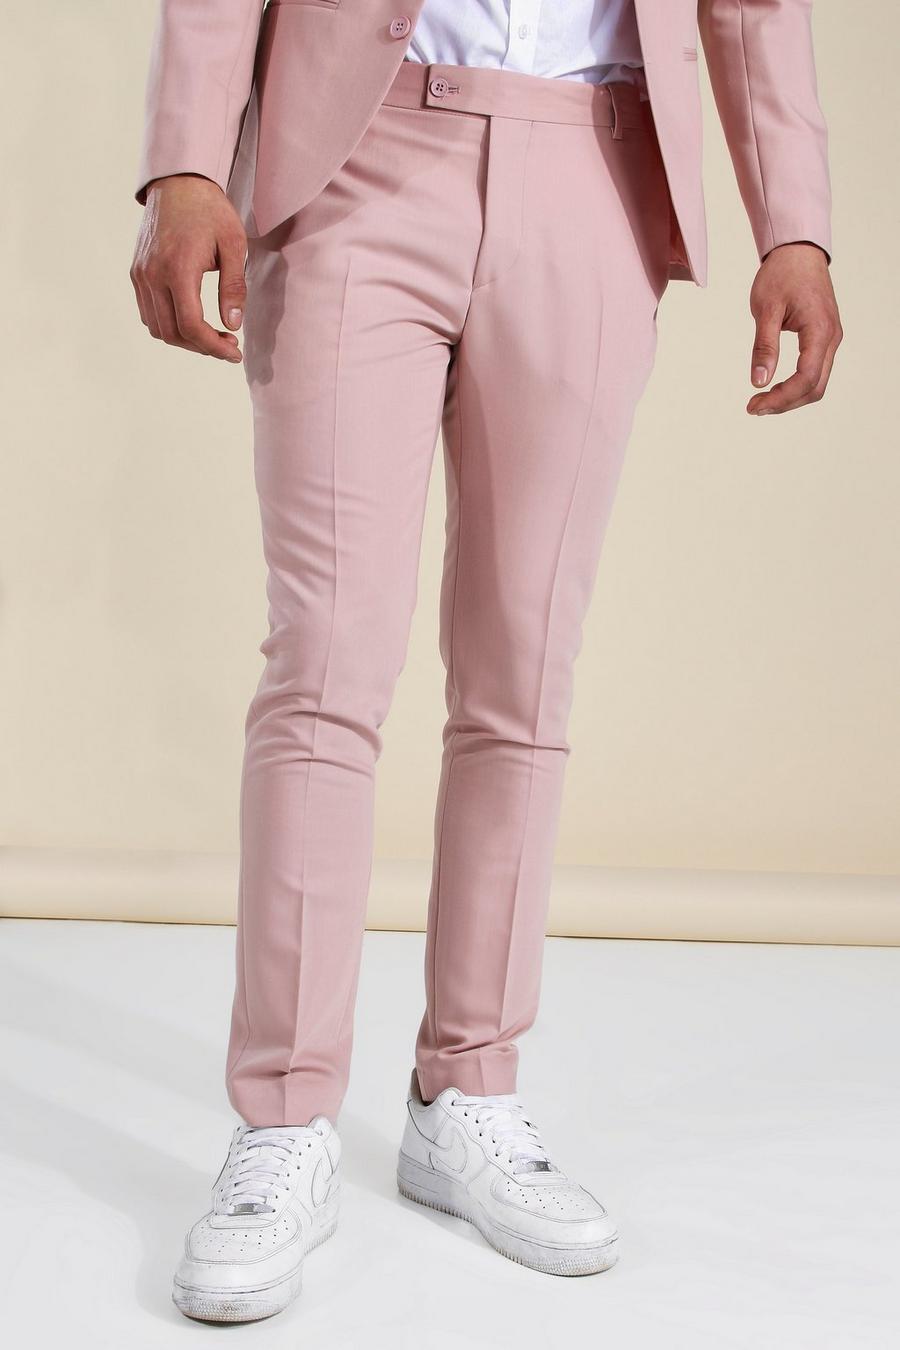 Men's Skinny Light Pink Suit Pants